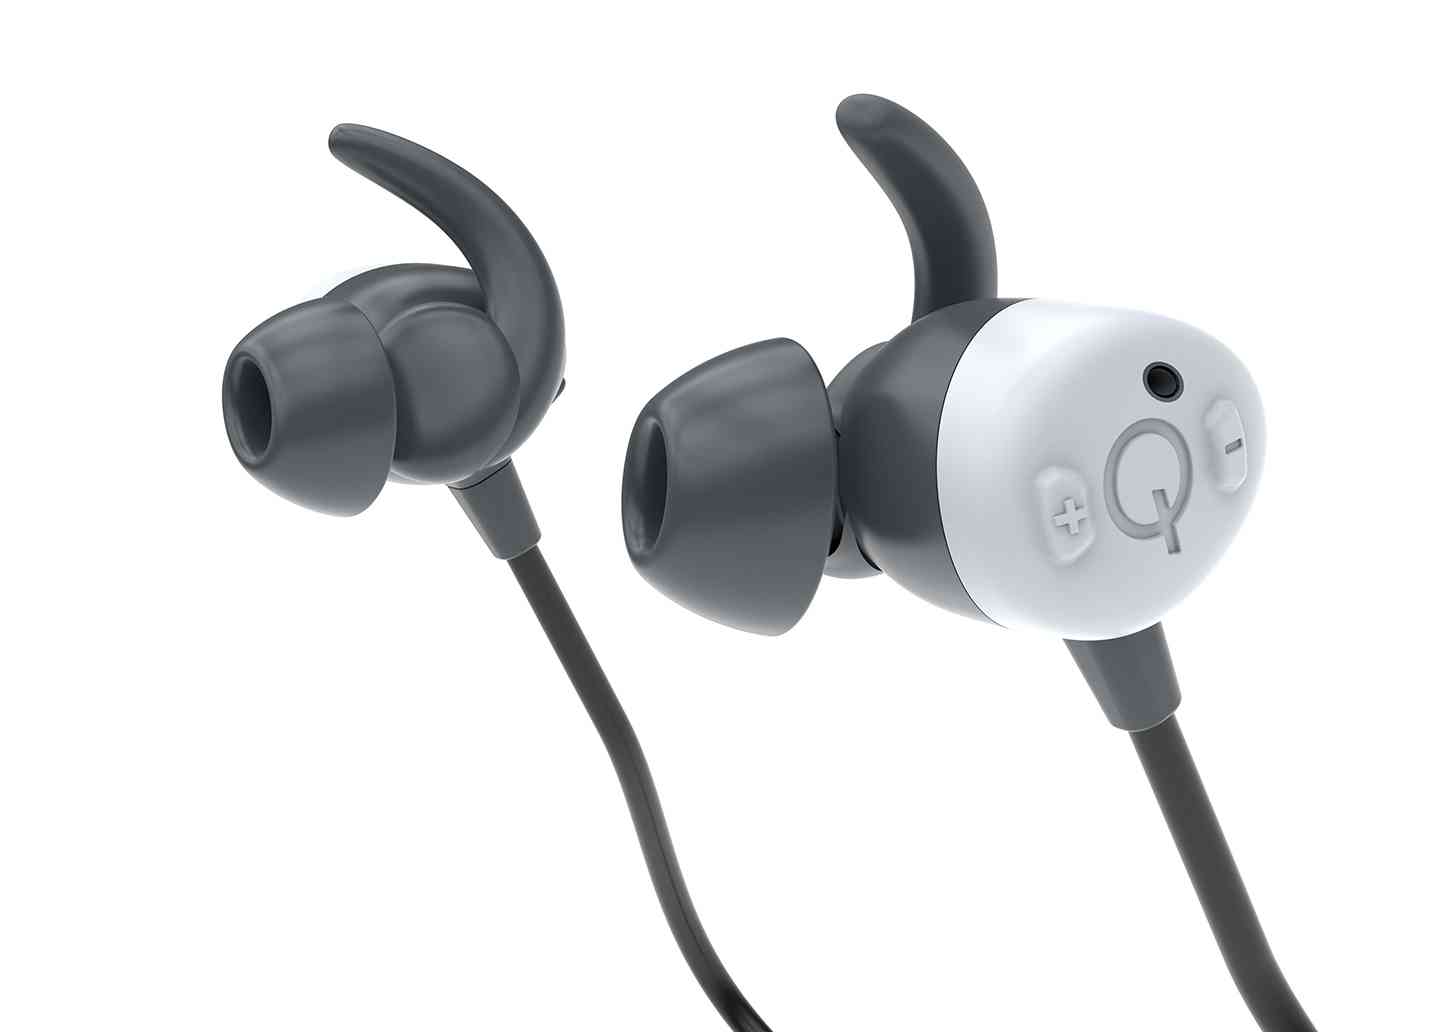 Google Qualcomm Assistant earphones reference design